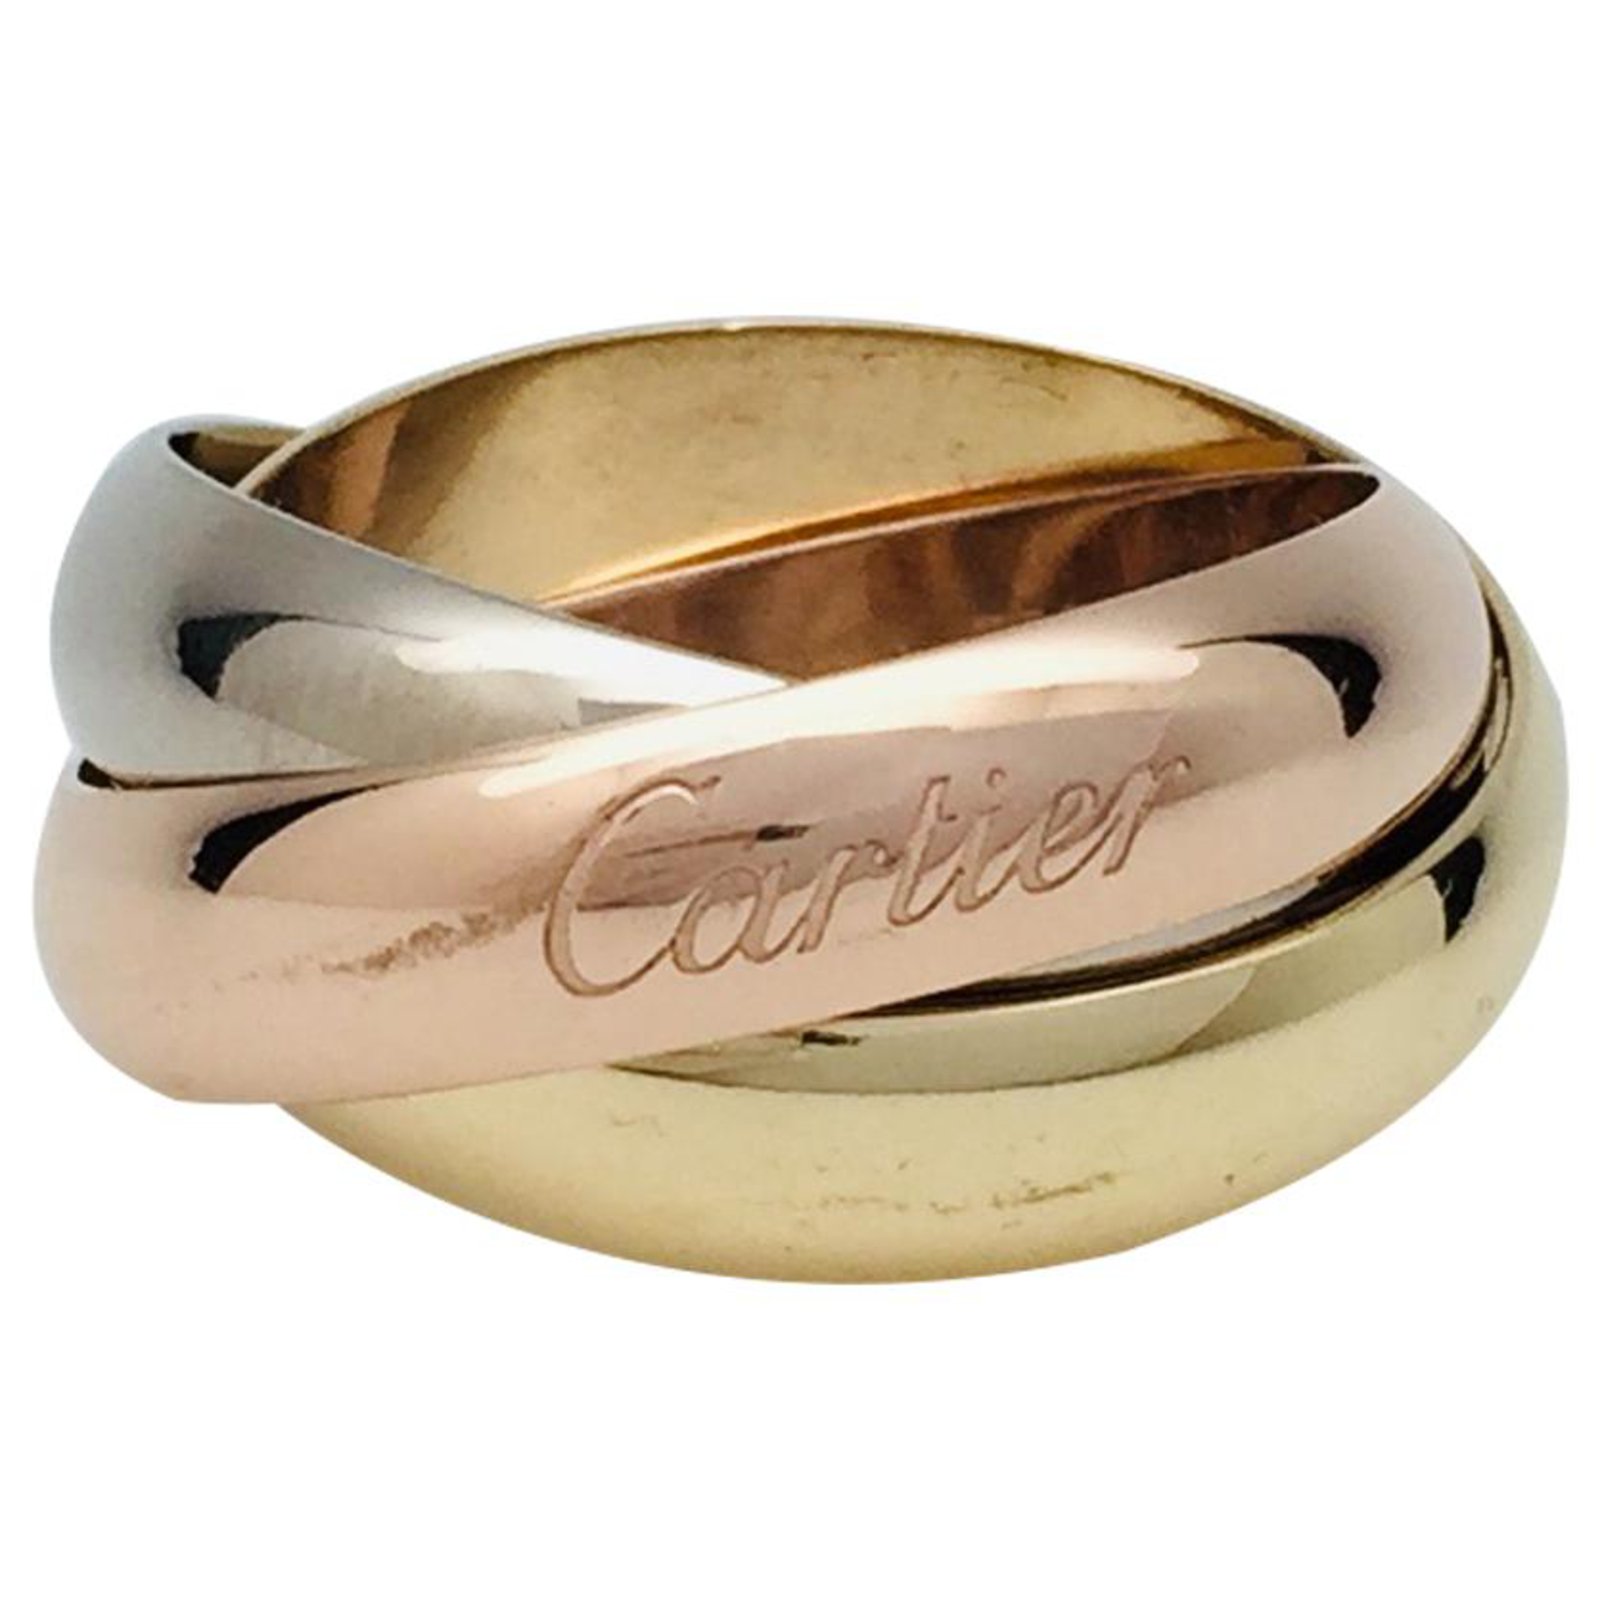 cartier three gold wedding ring